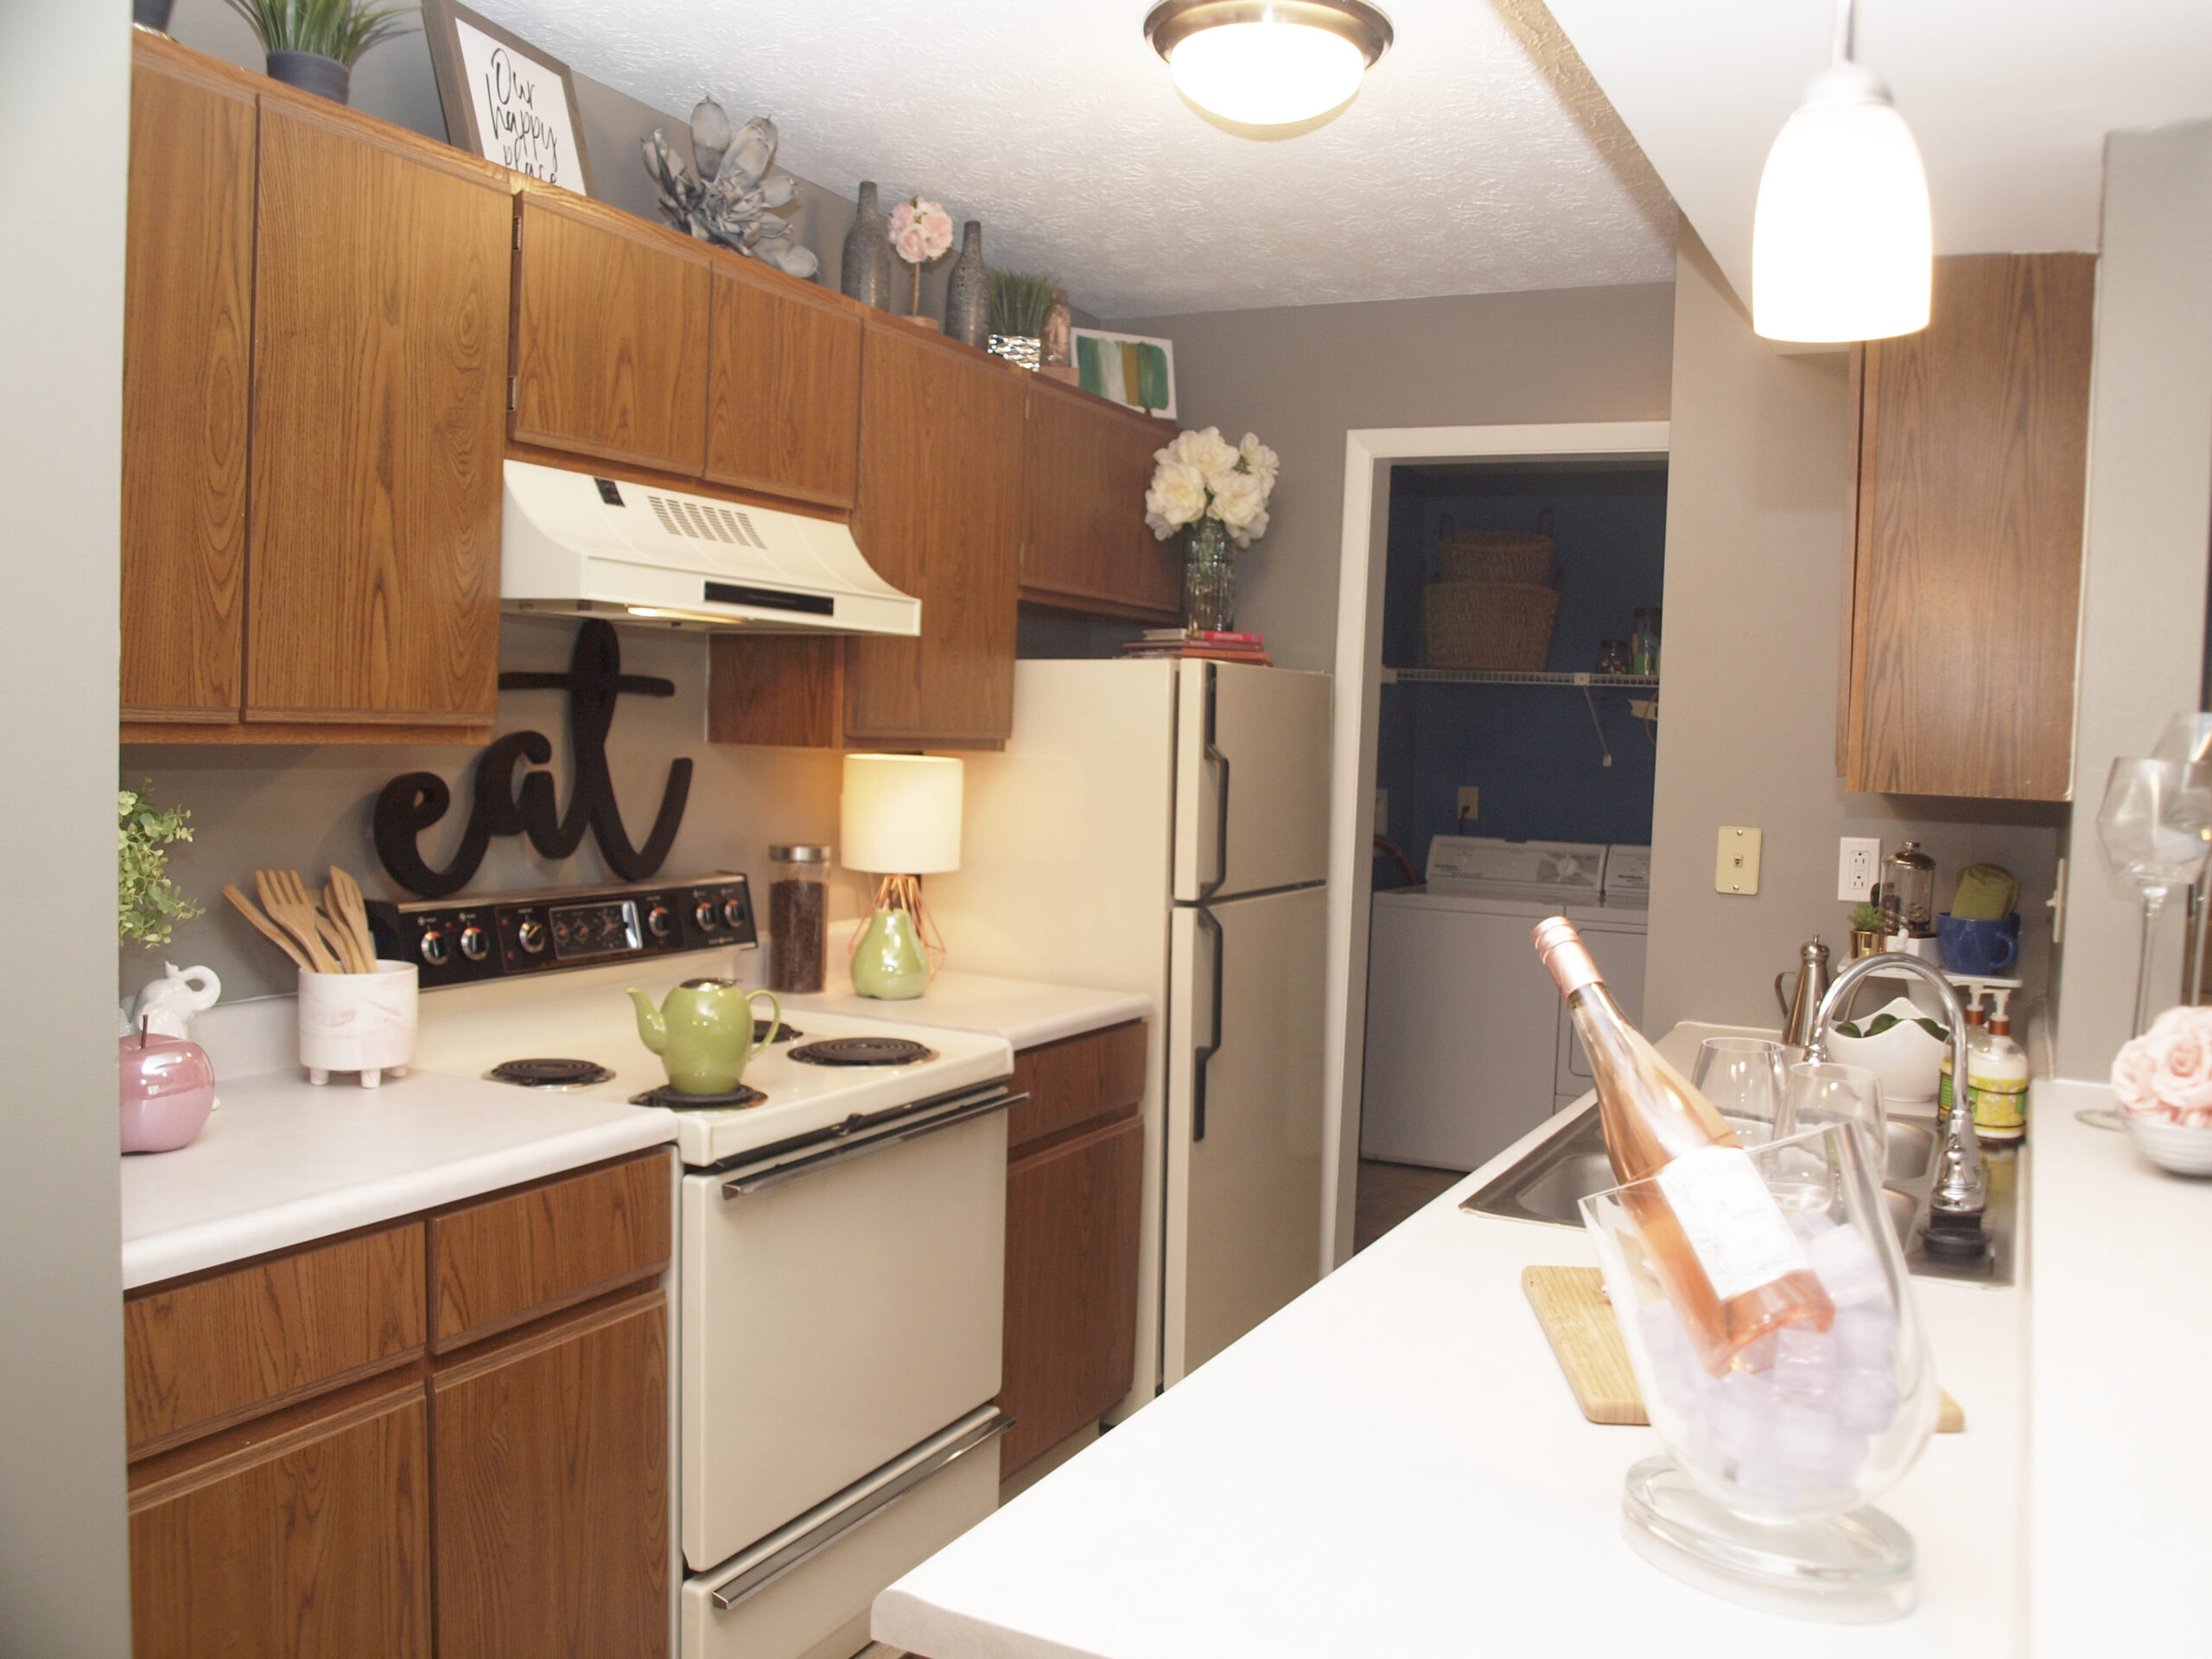 An alley kitchen with dark walnut cabinets and white appliances.